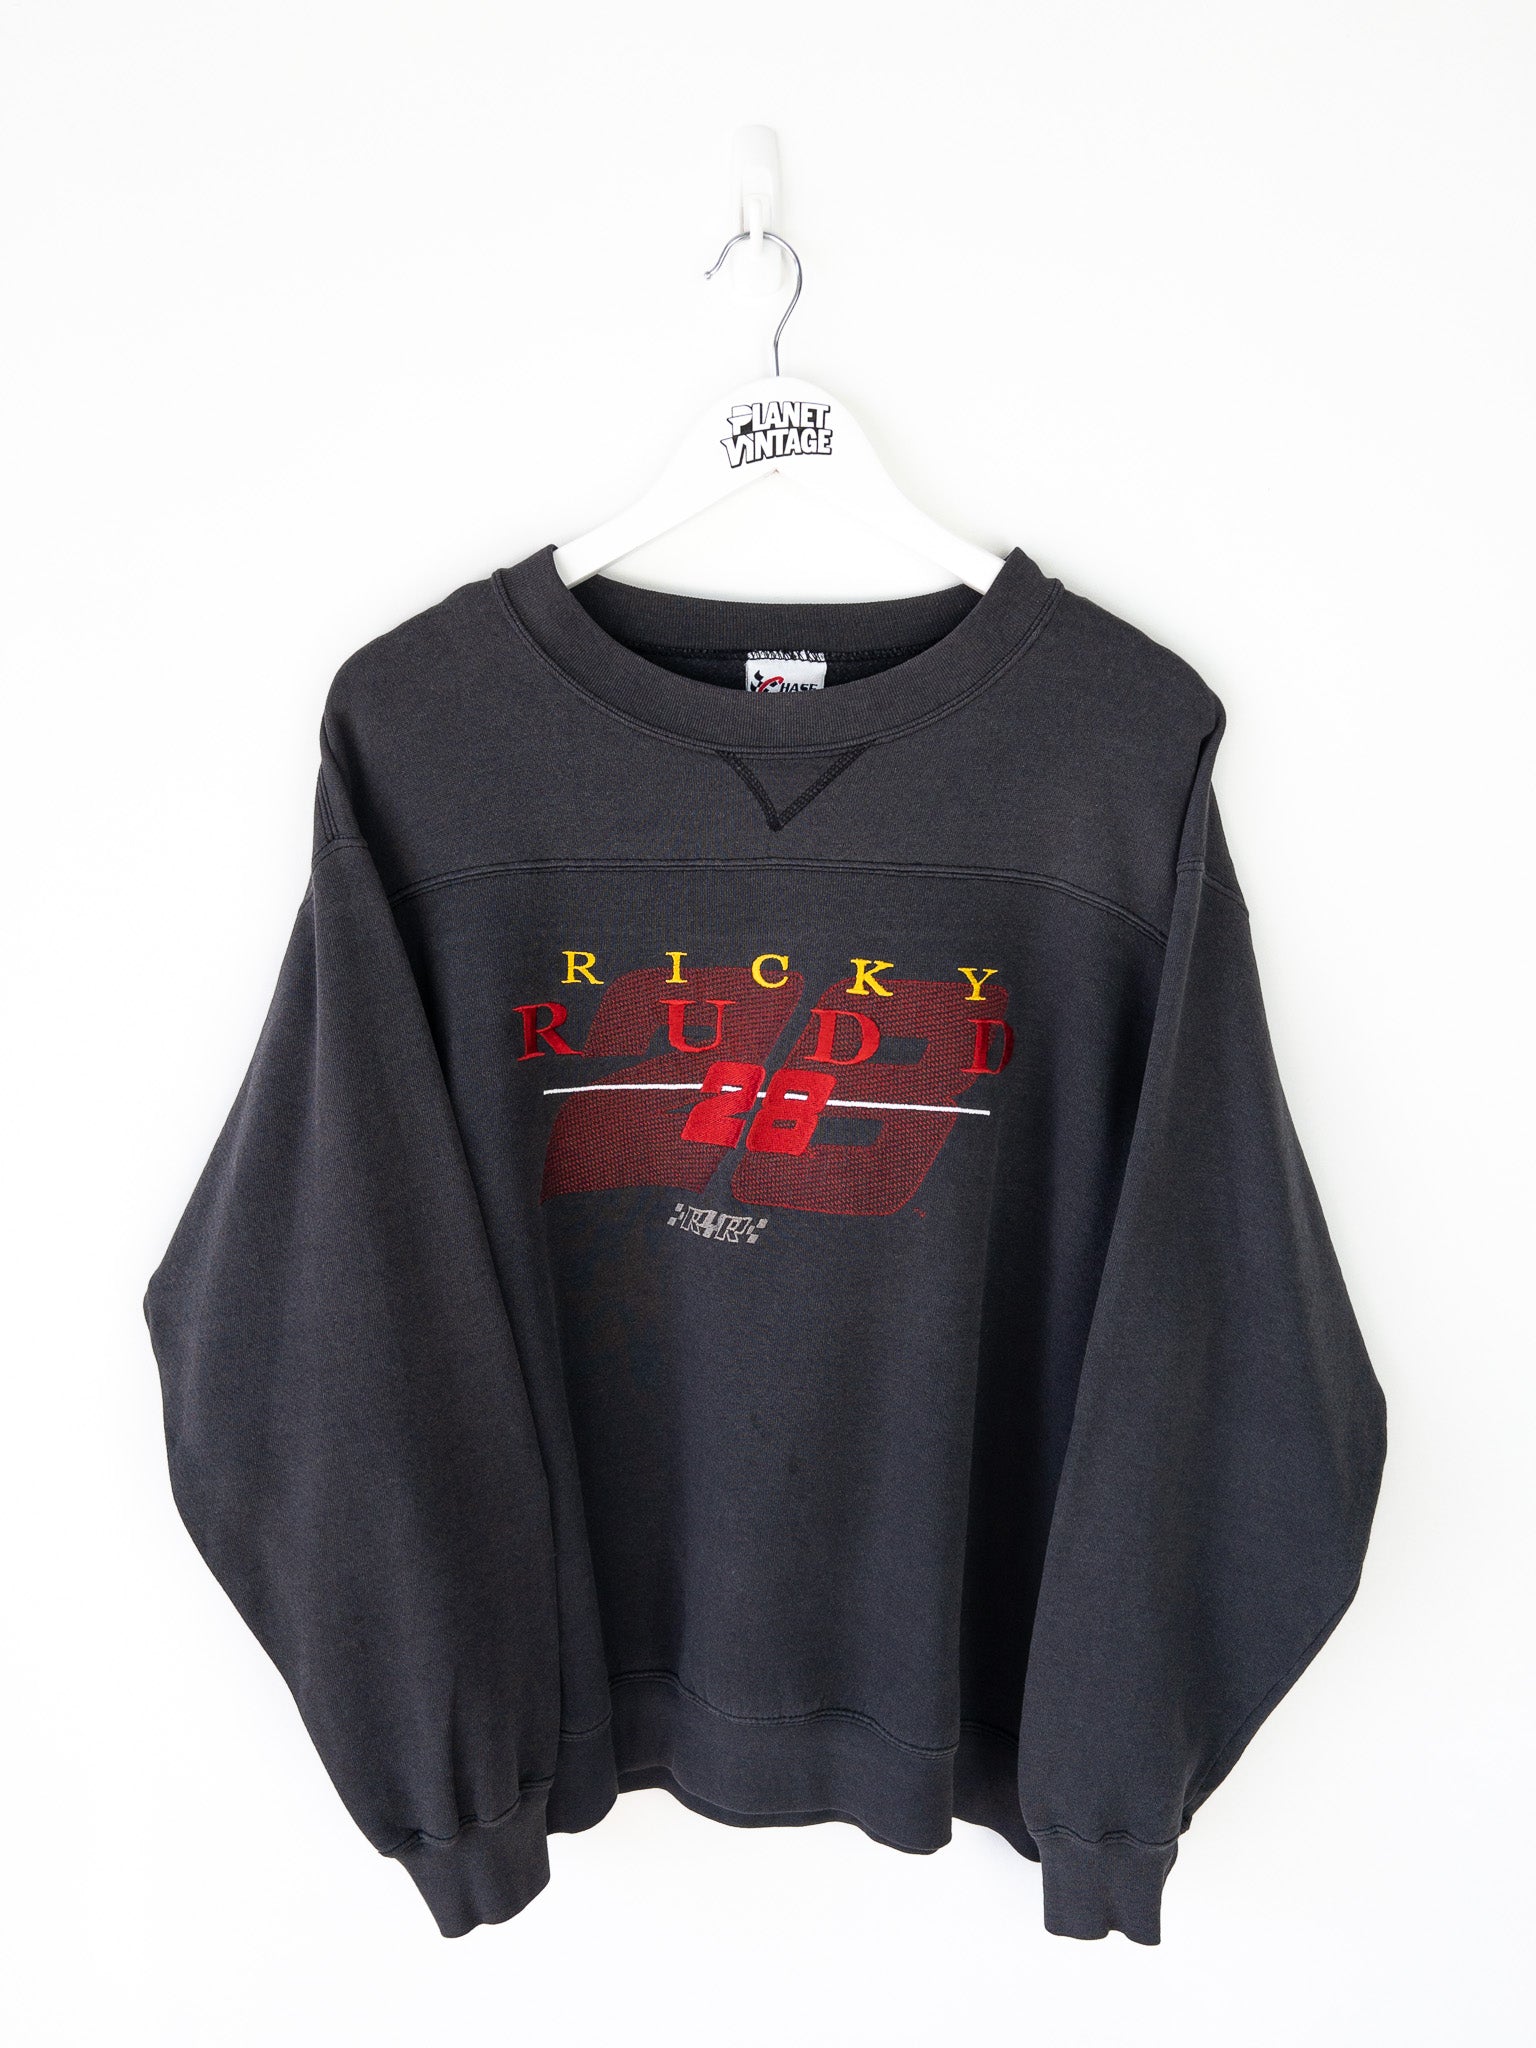 Vintage Ricky Rudy Racing Sweatshirt (L)